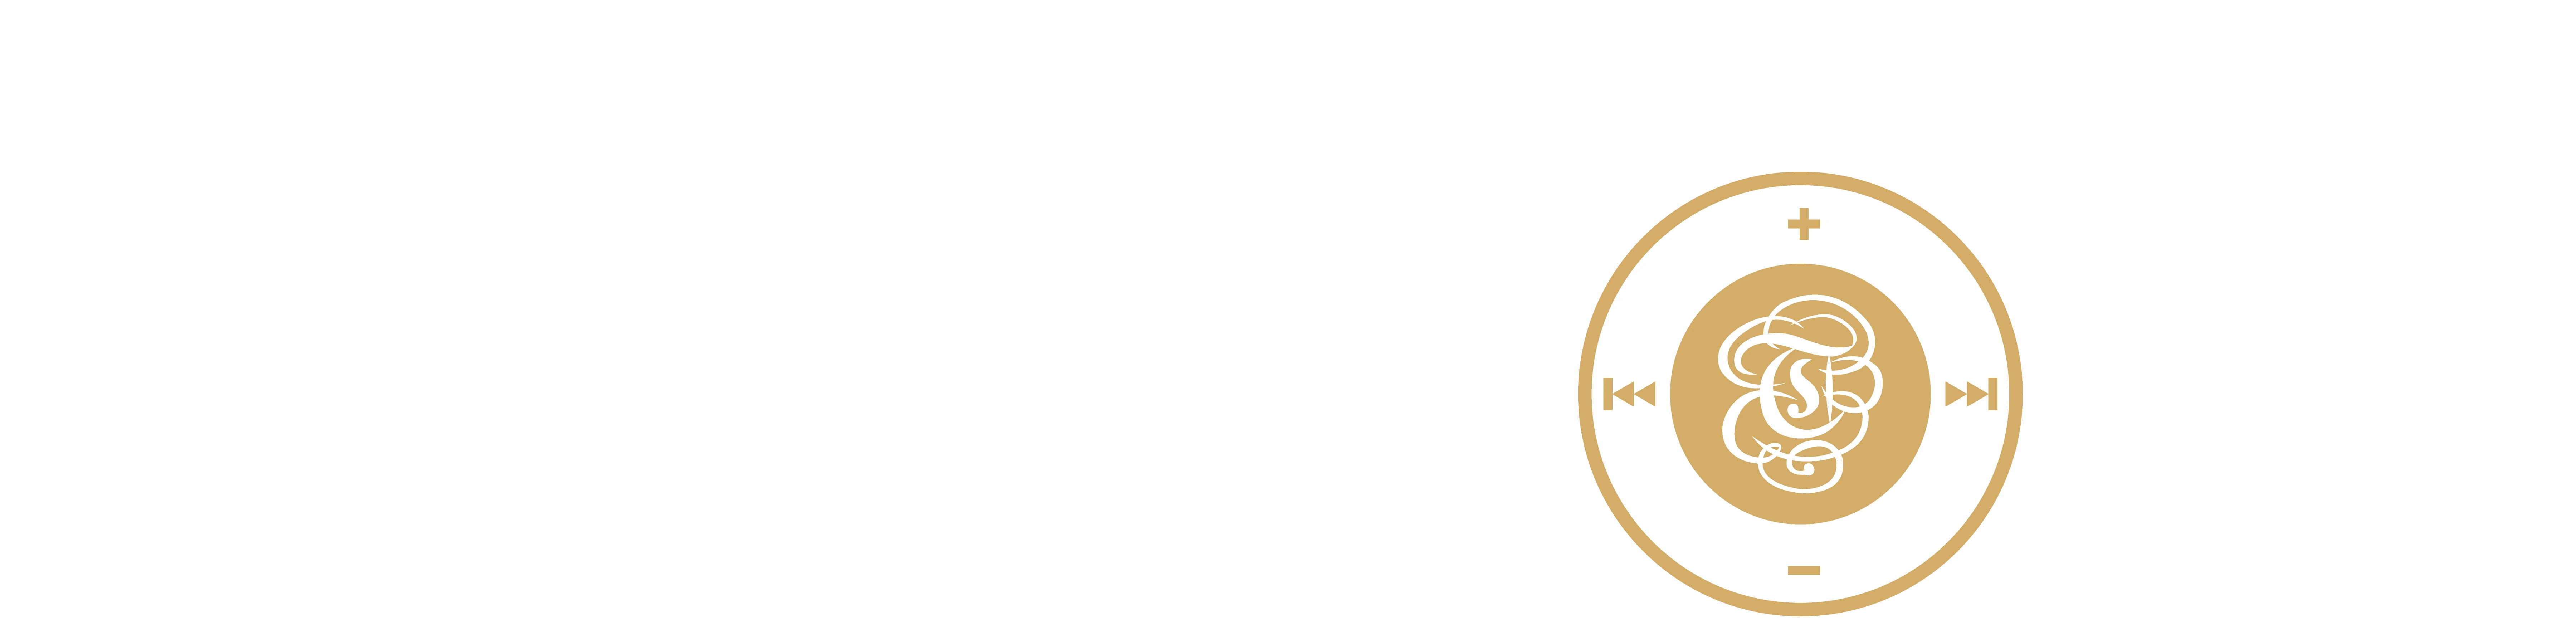 aaer-logo